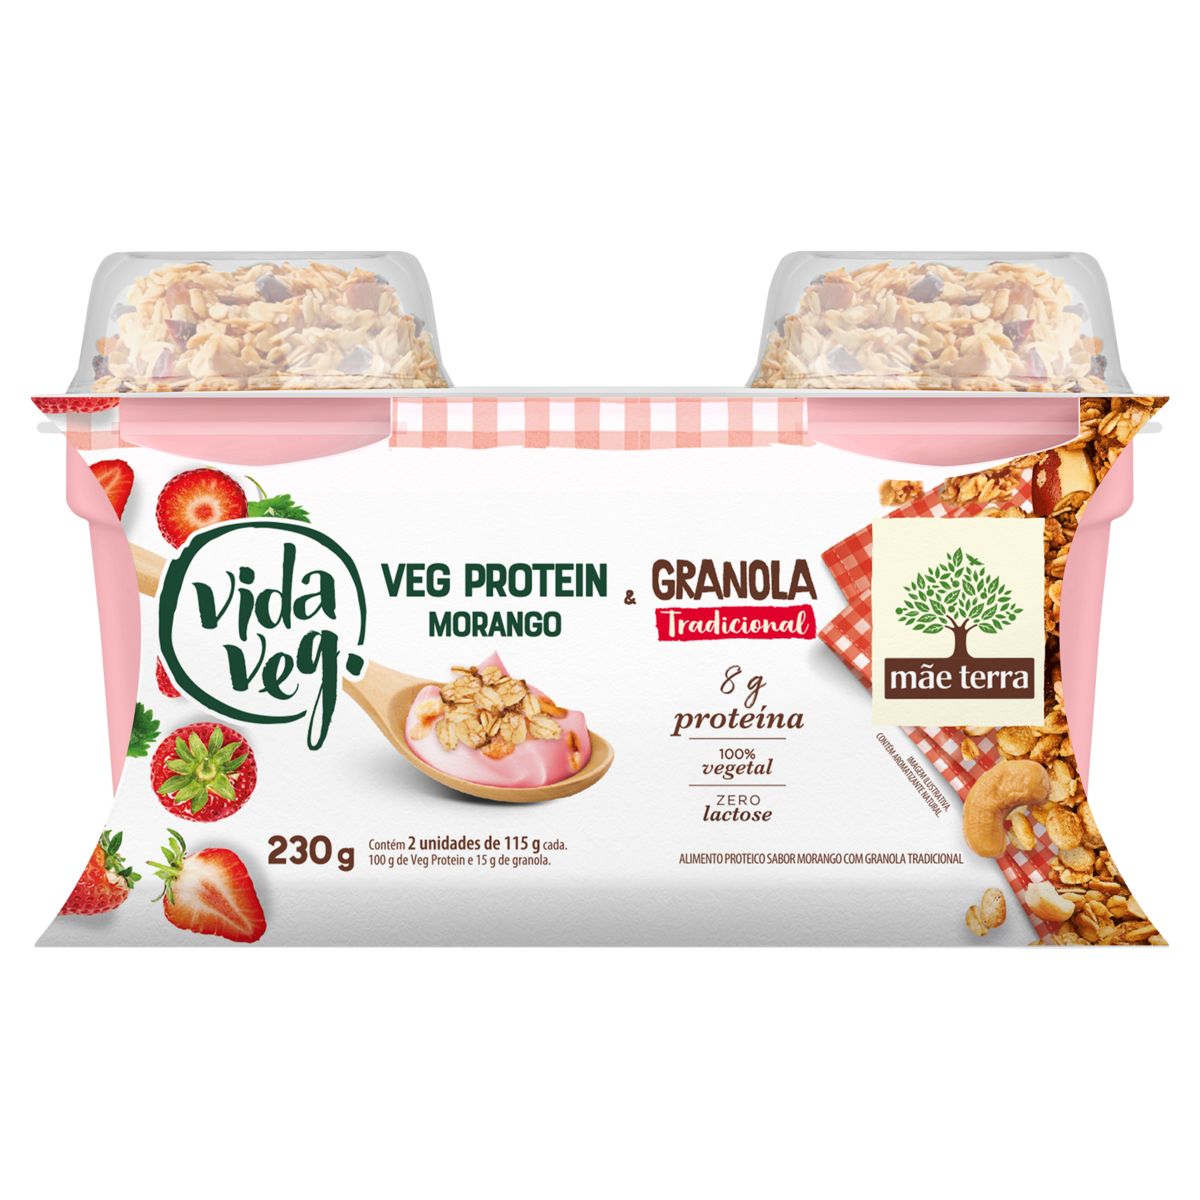 Iogurte Vida Veg Protein Vegano Morango com Granola 230g